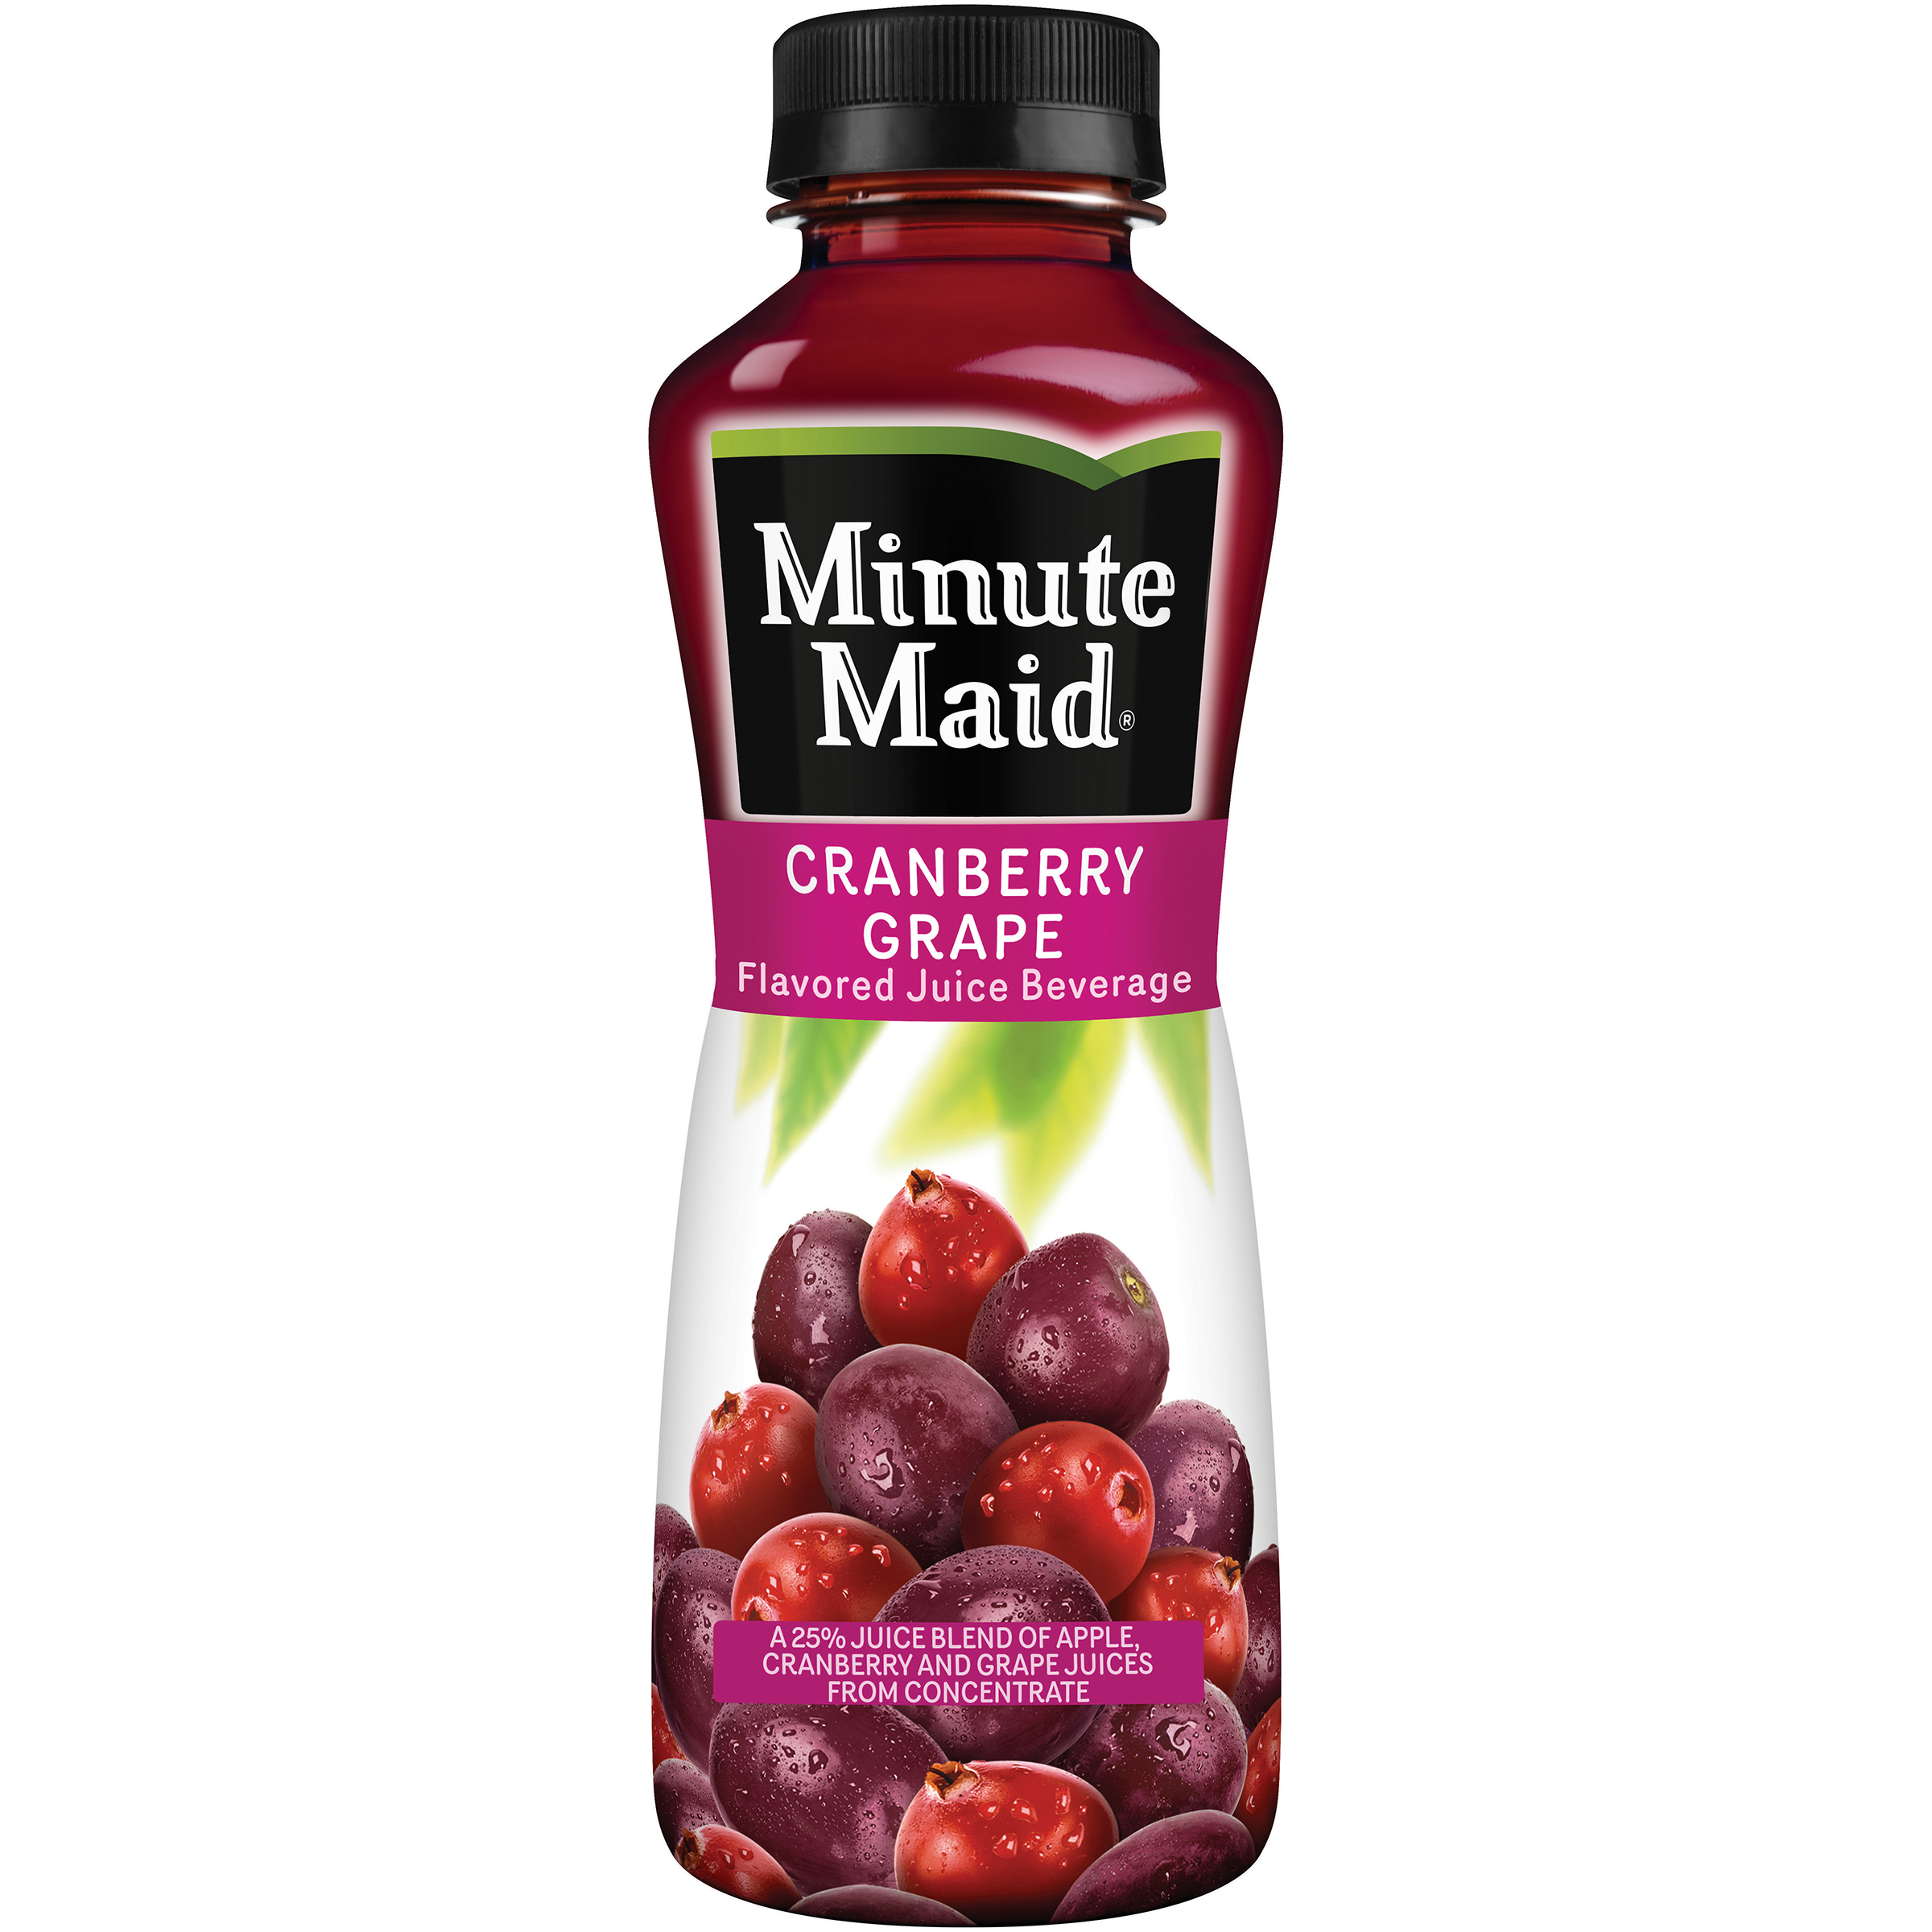 Minute Maid Cranberry Grape Flavored Juice Beverage